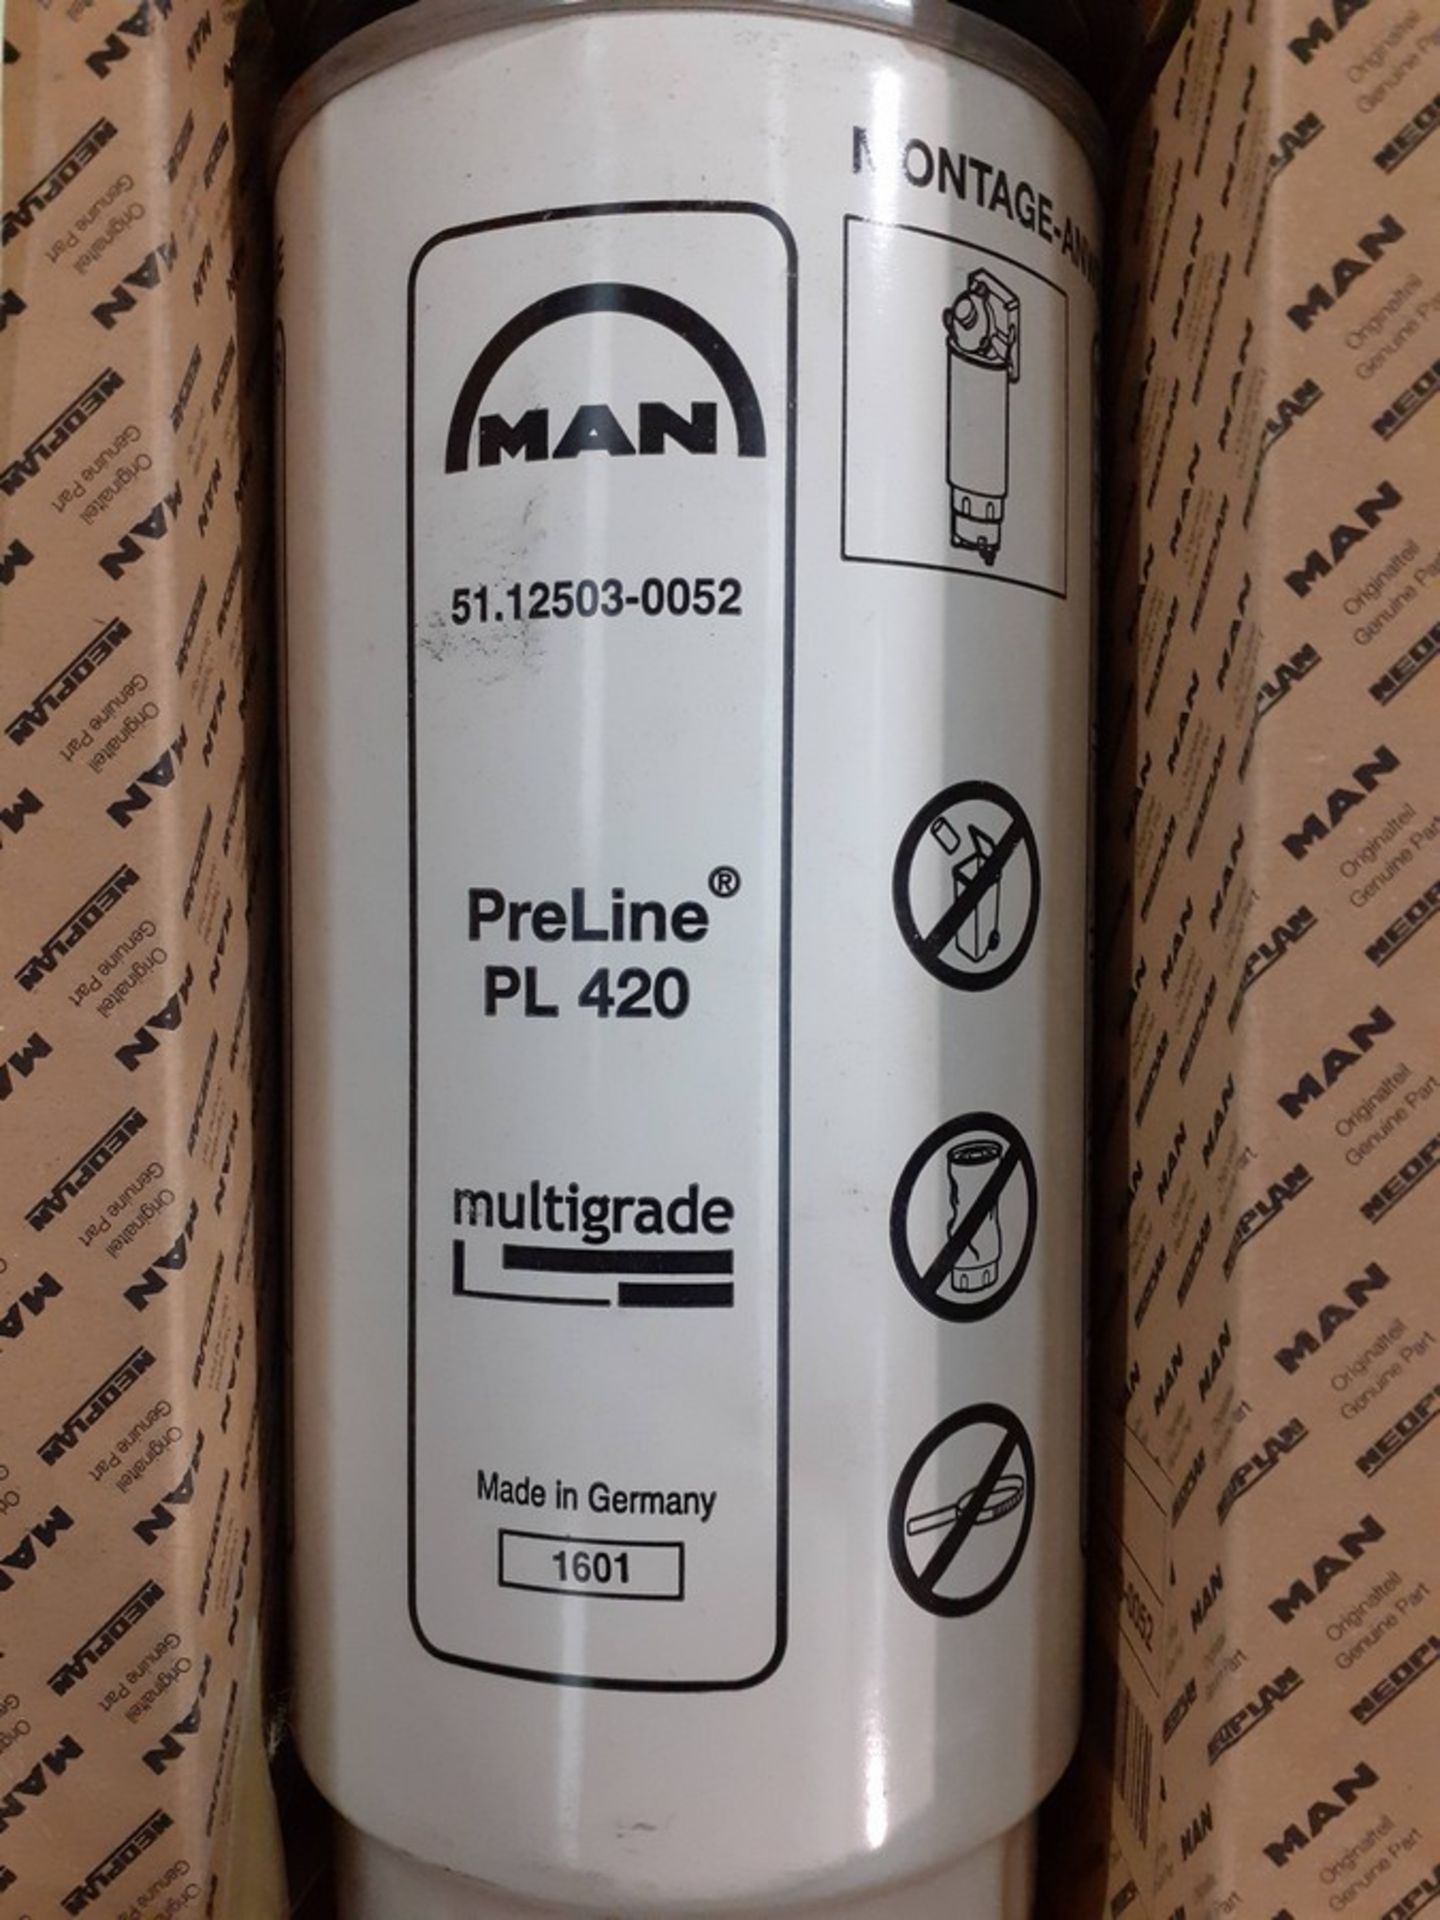 Mann fuel filter preline 4200 - 51.12503-0052 x 4 - Image 2 of 6